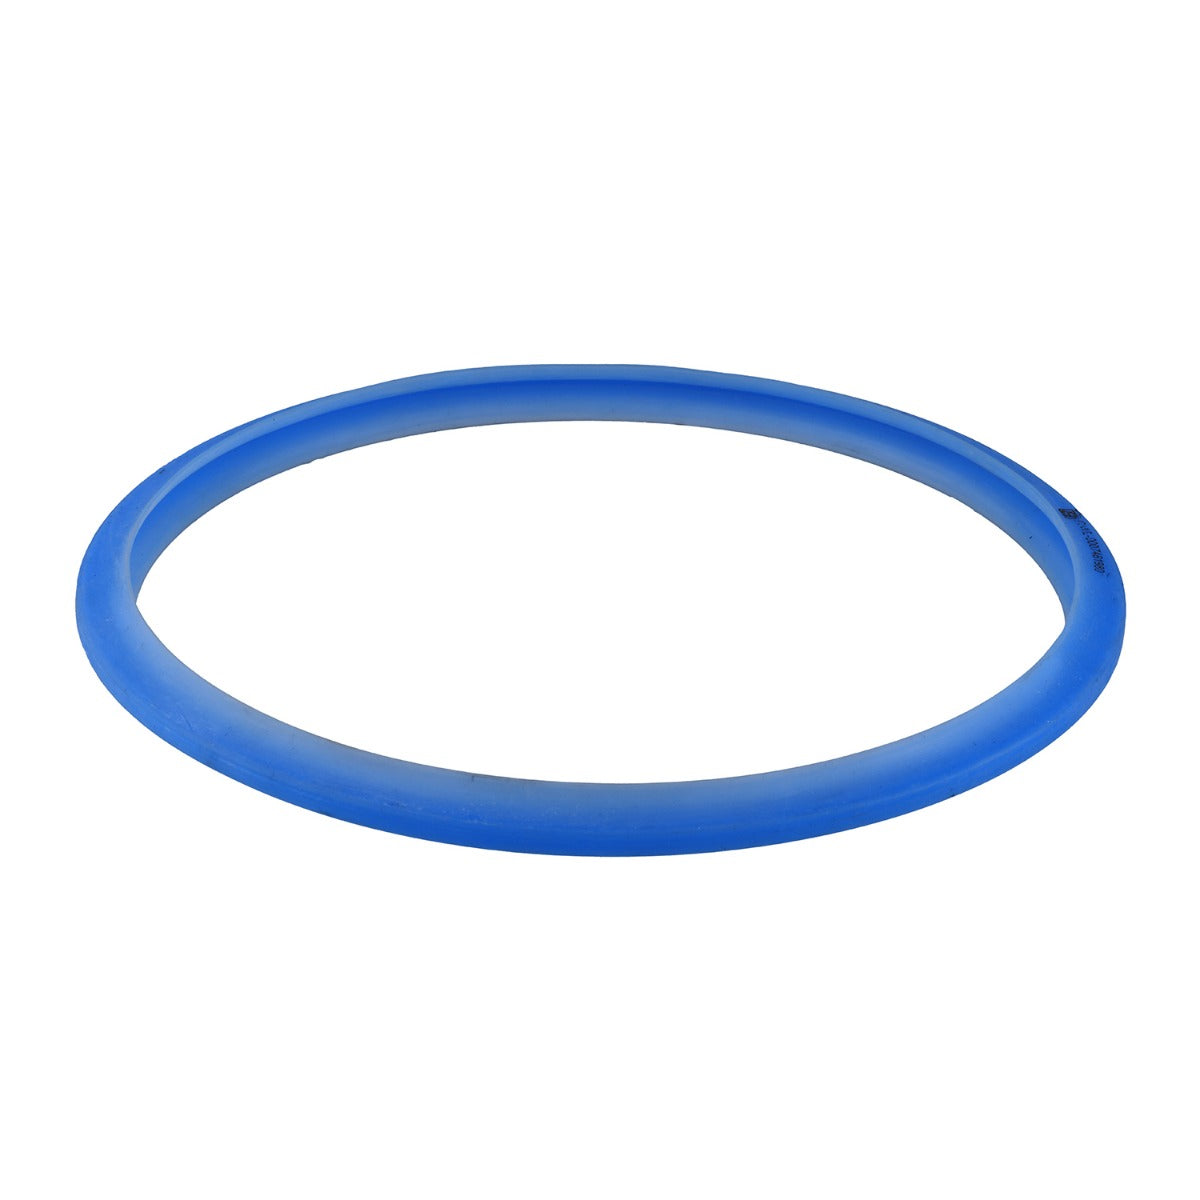 Gasket Sealing Ring for Vinod 10 L Pressure Cooker and Jumbo Pan #48699 |  Buy Cooker Gasket Online